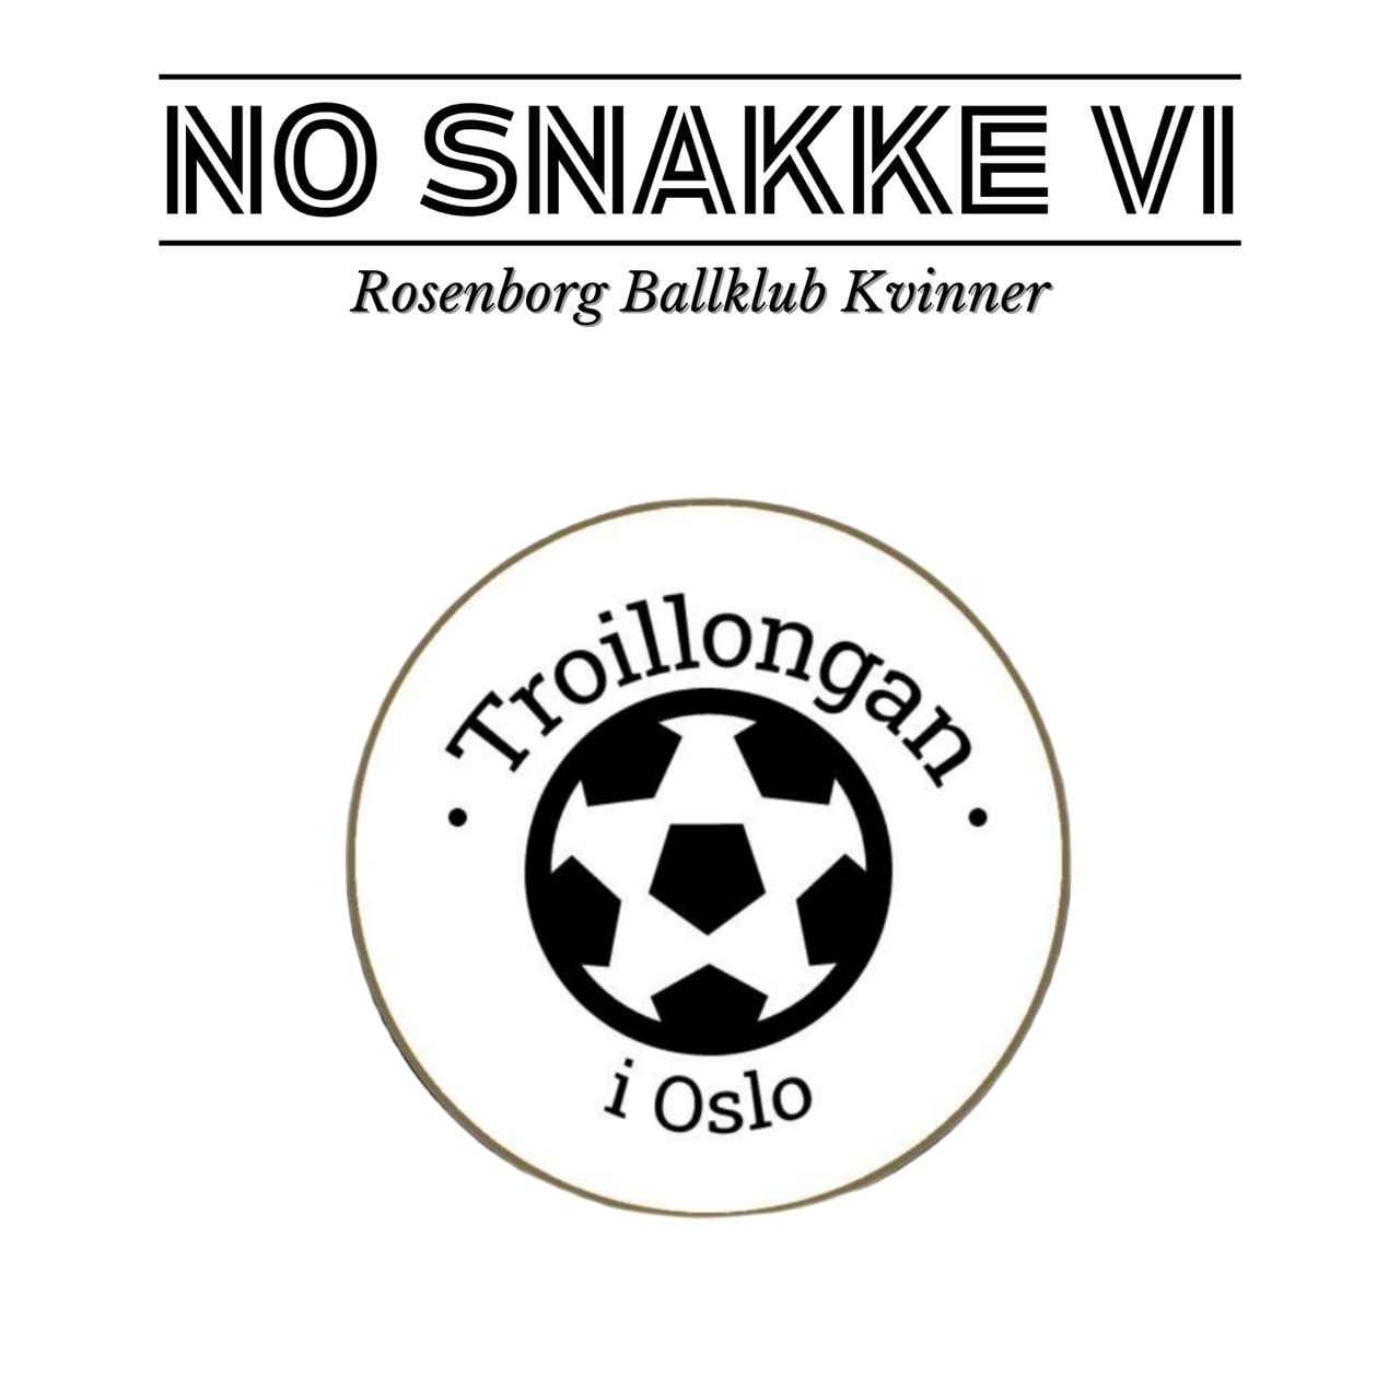 cover art for Episode 27 Troillongan i Oslo